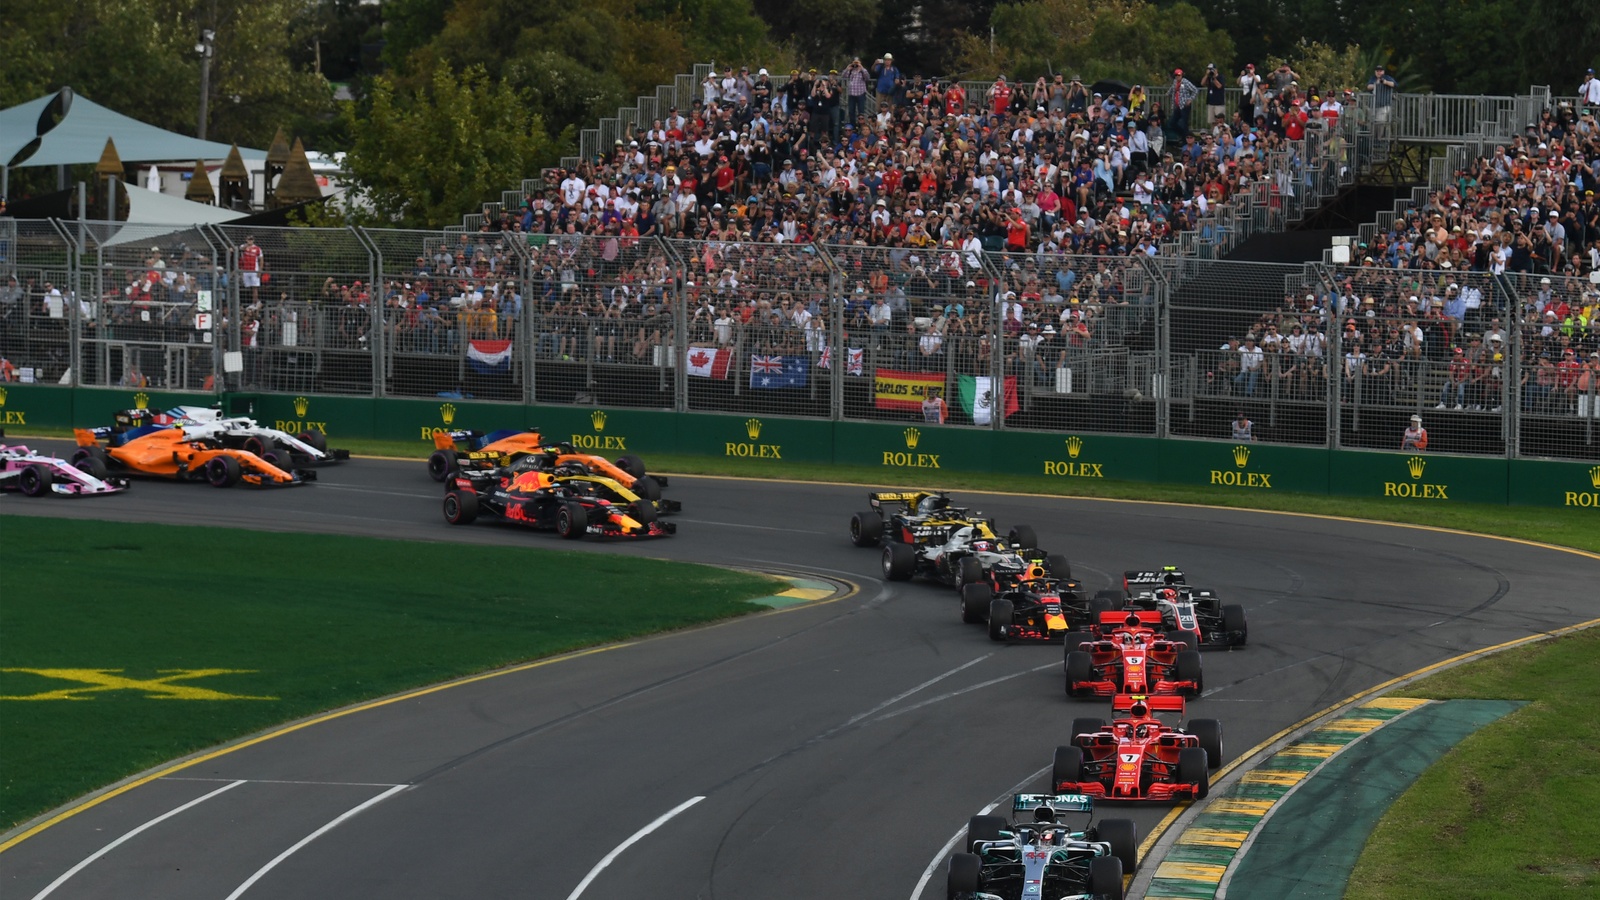 AU_F1_Melbourne_Australian Grand Prix_Racing.JPG